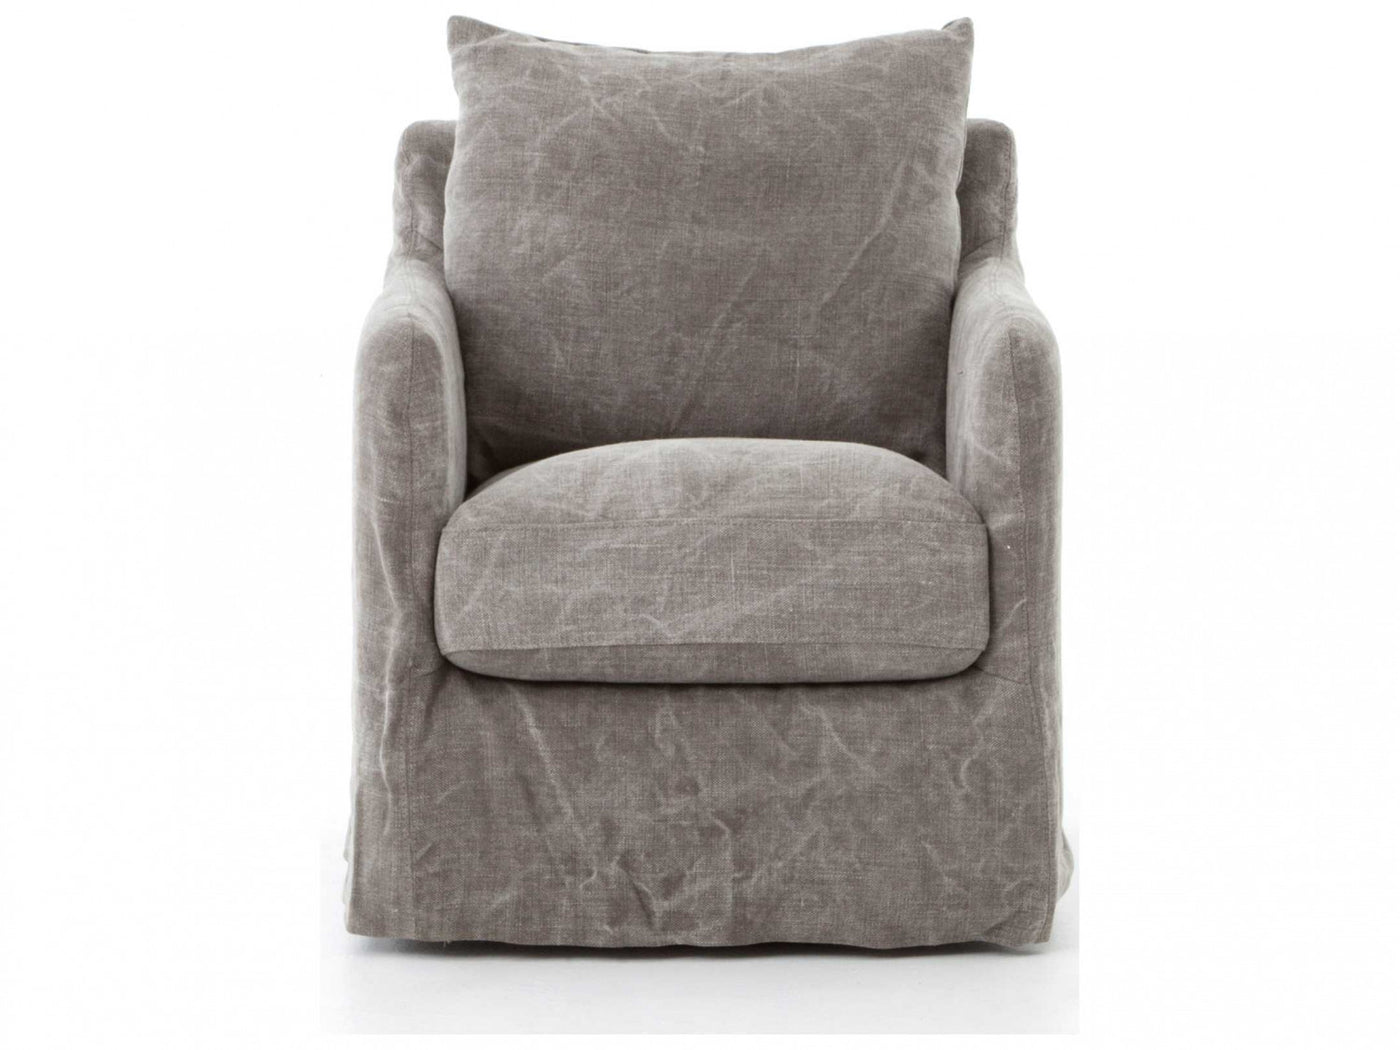 Marshall Swivel Chair- Stonewashed Gray